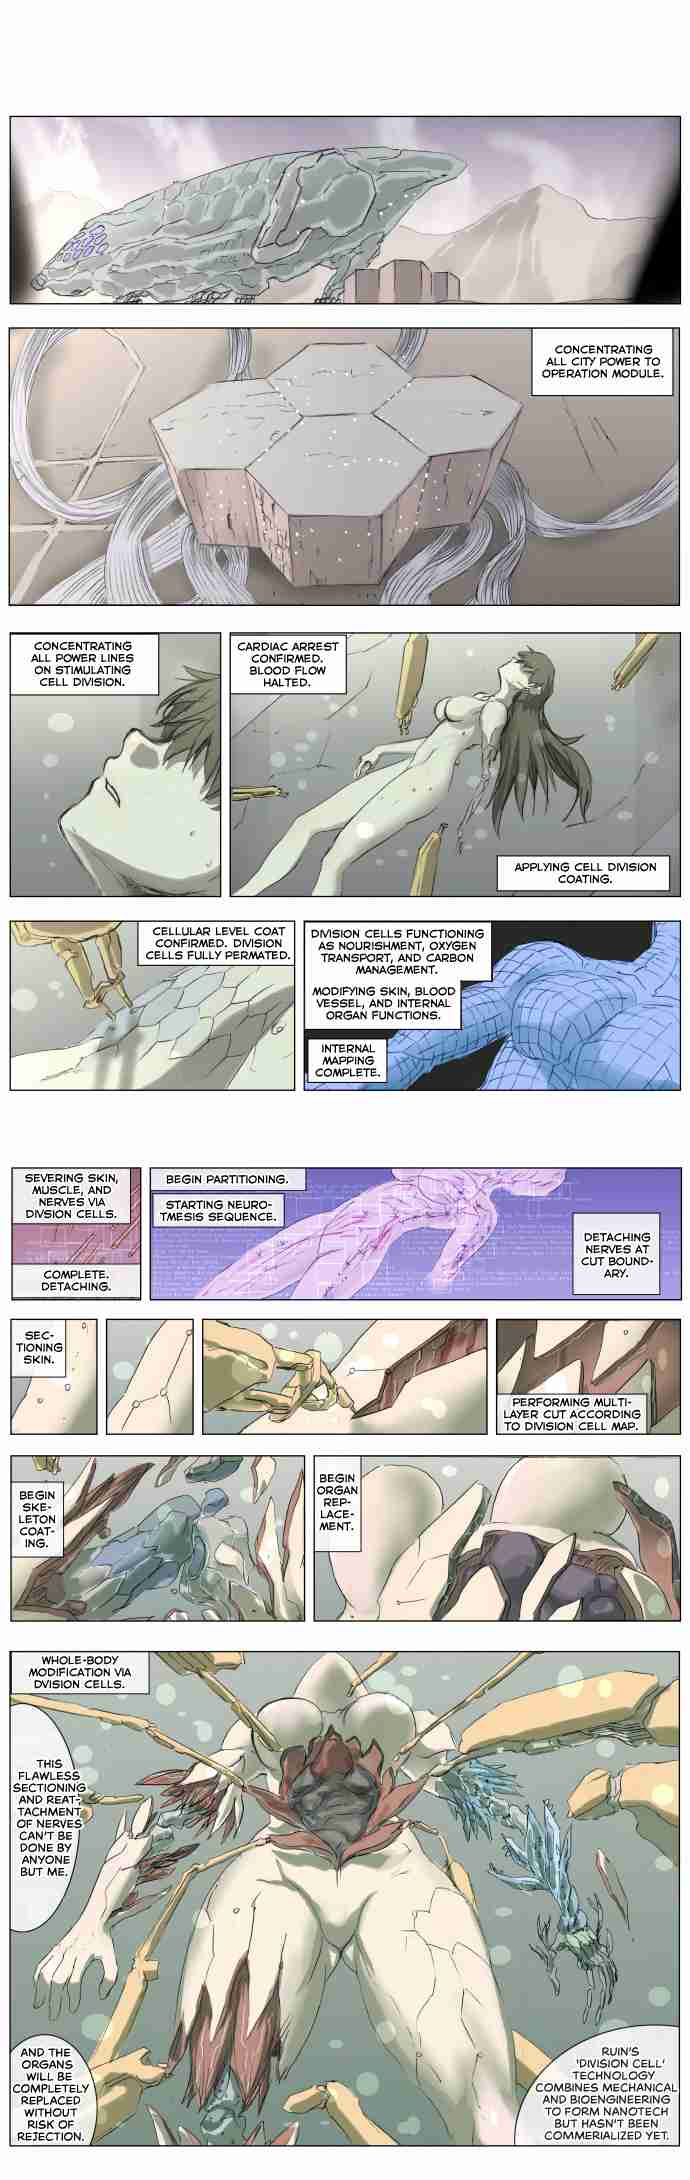 Knight Run Vol. 3 Ch. 194 Hero Extra Story 3 | A Future Poem